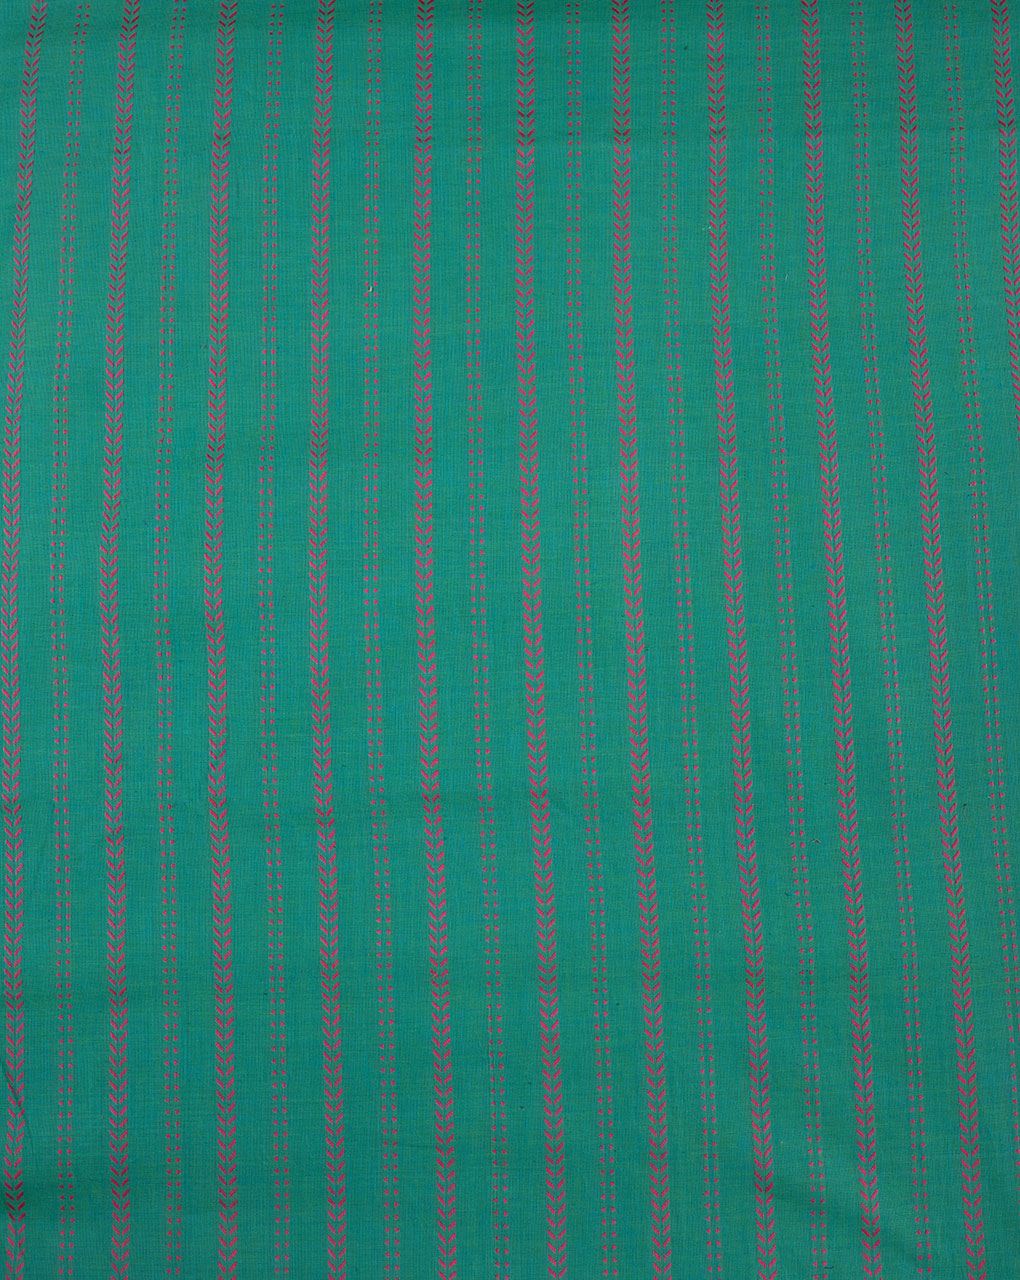 Stripes Woven Jacquard Loom Textured Cotton Fabric - Fabriclore.com